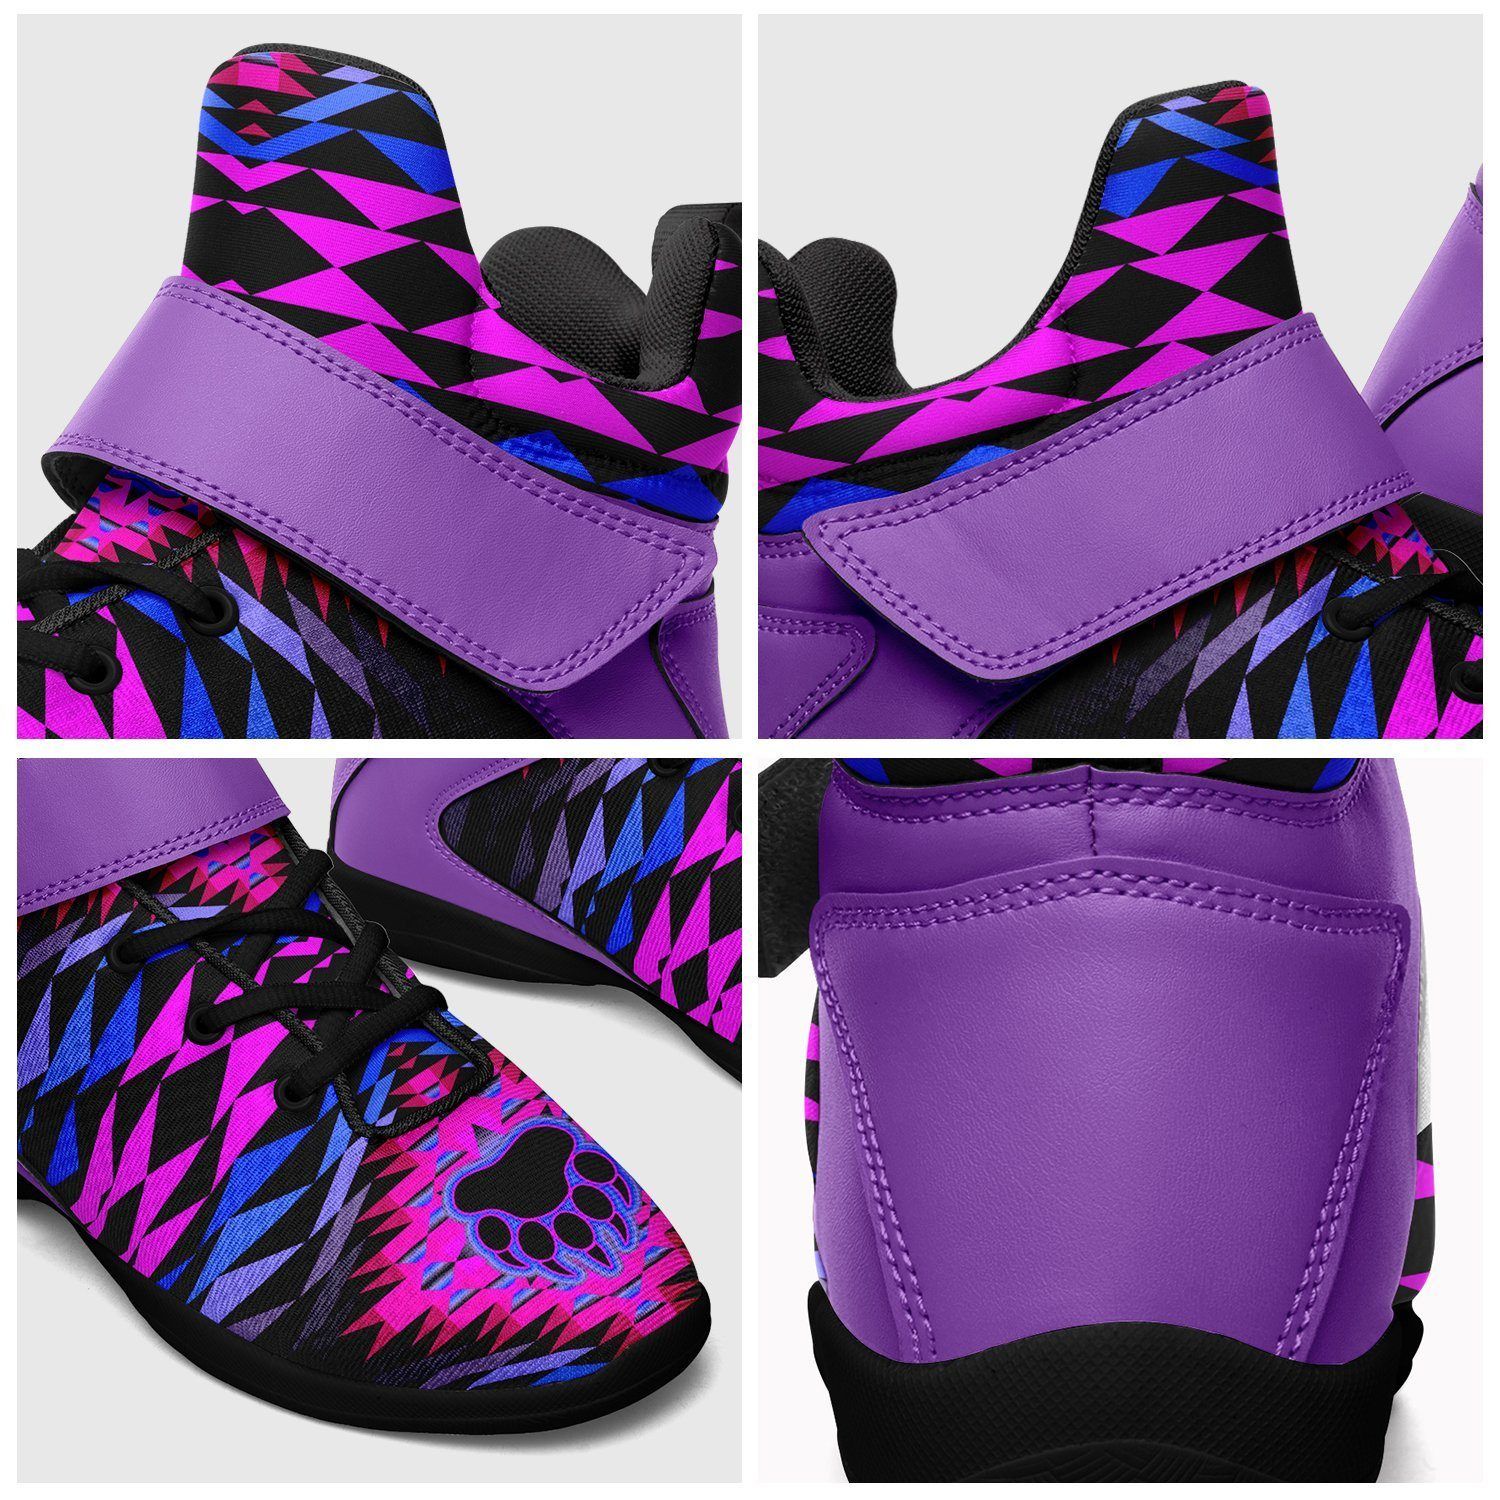 Sunset Bearpaw Blanket Pink Ipottaa Basketball / Sport High Top Shoes - Black Sole 49 Dzine 